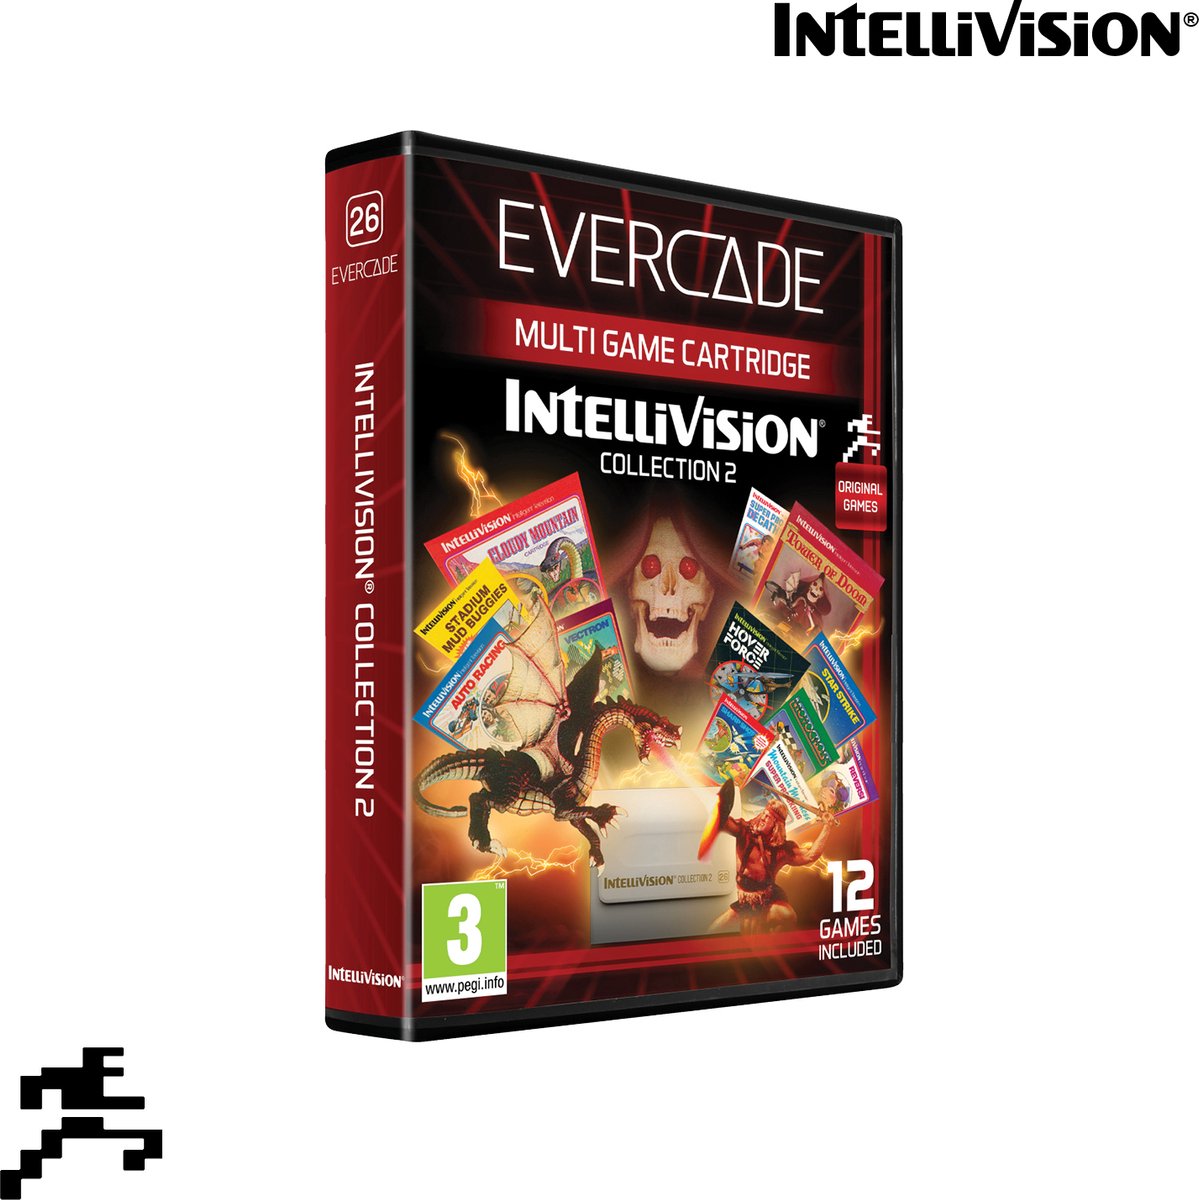 Evercade Intellivision - Cartridge 2 (hardware), Evercade